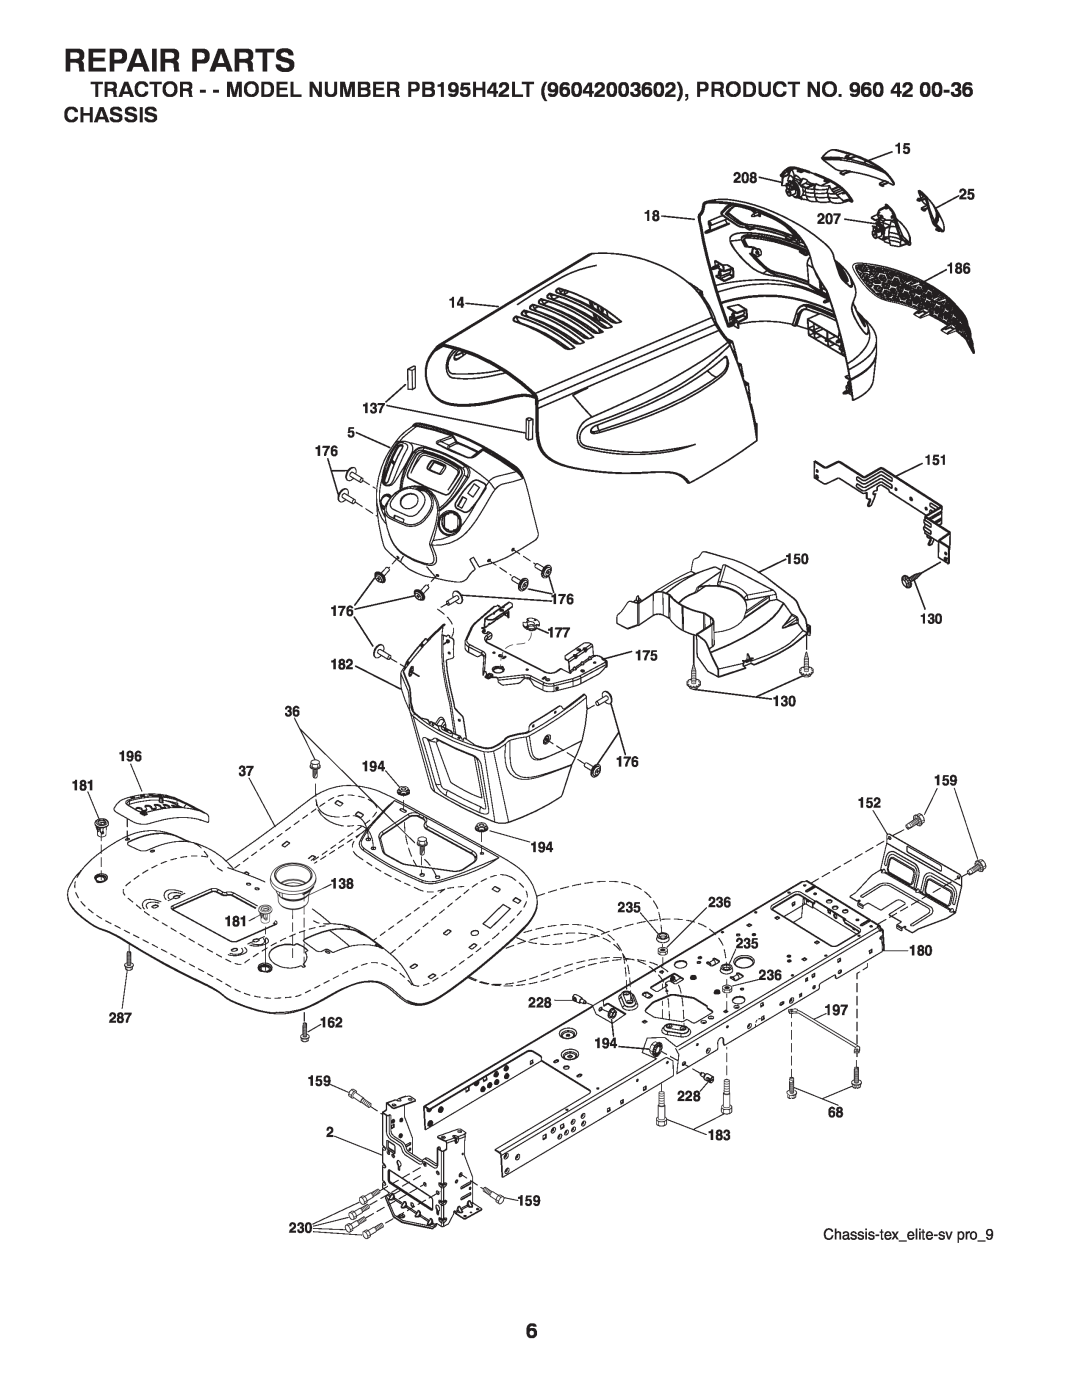 Poulan 96042003602 manual Repair Parts, Chassis-tex_elite-svpro_9 